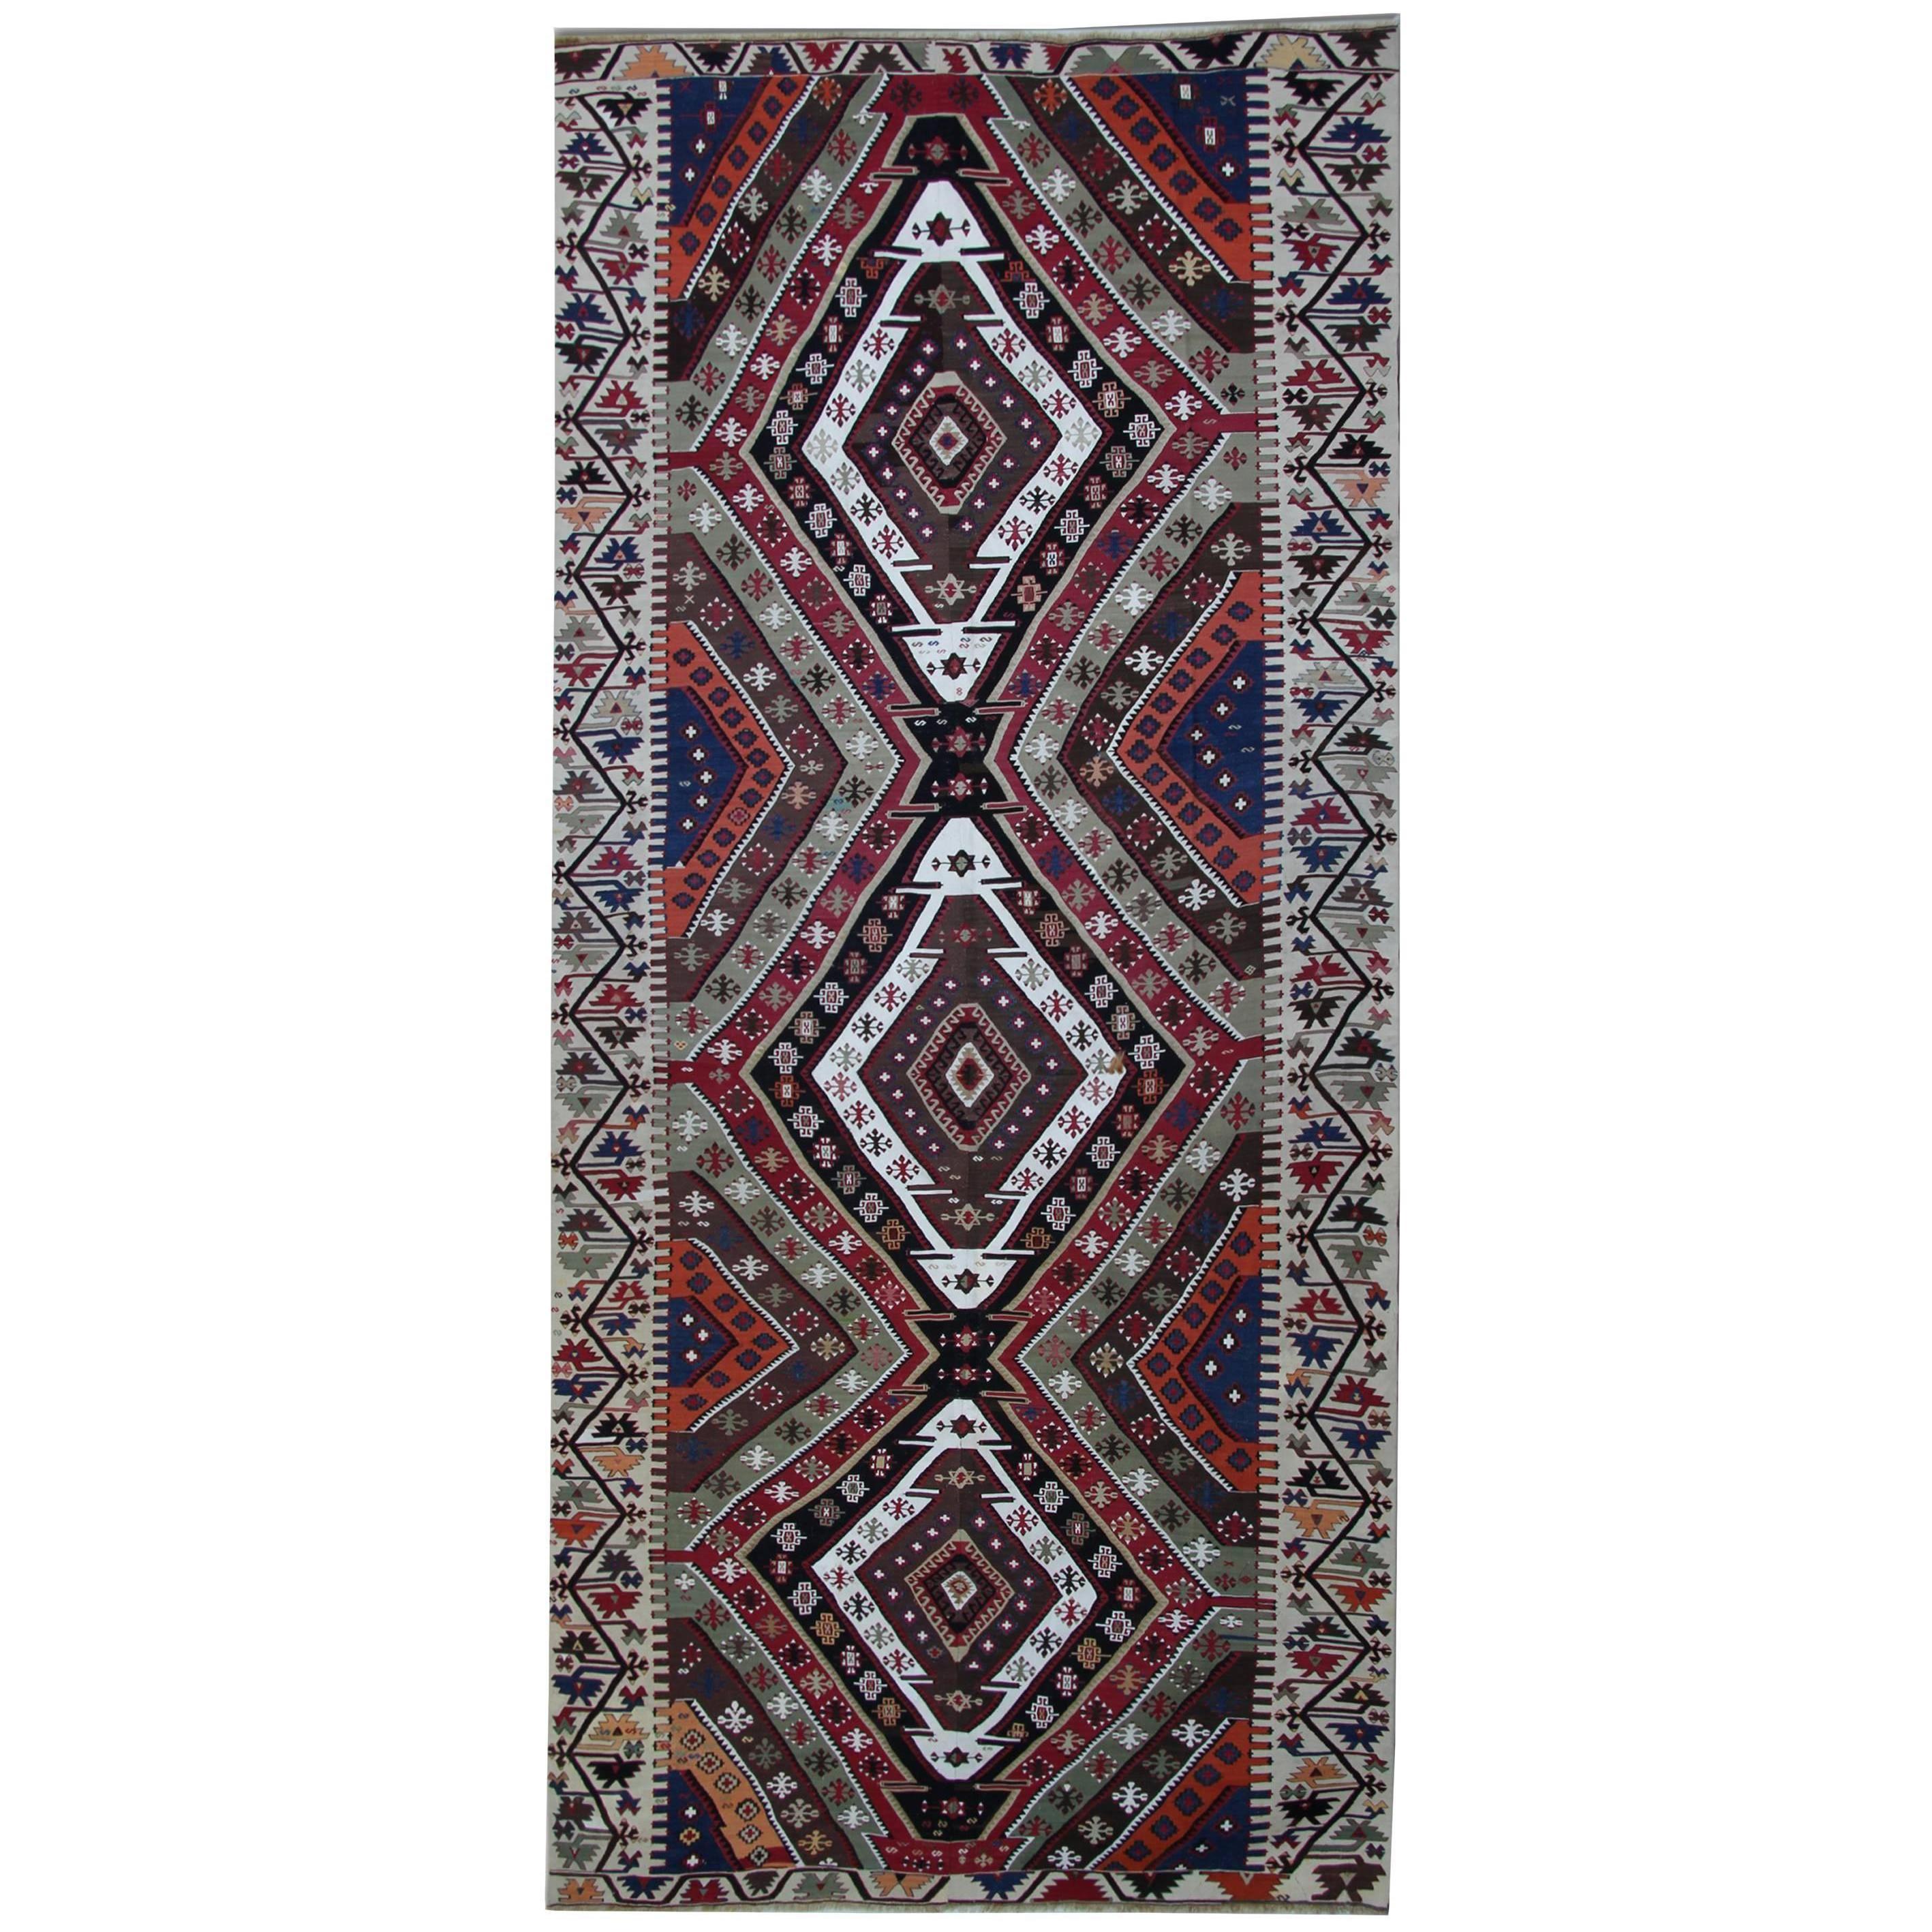 Tapis de couloir Kilim turcs, tapis ancien, tapis faits main, tapis orientaux à vendre